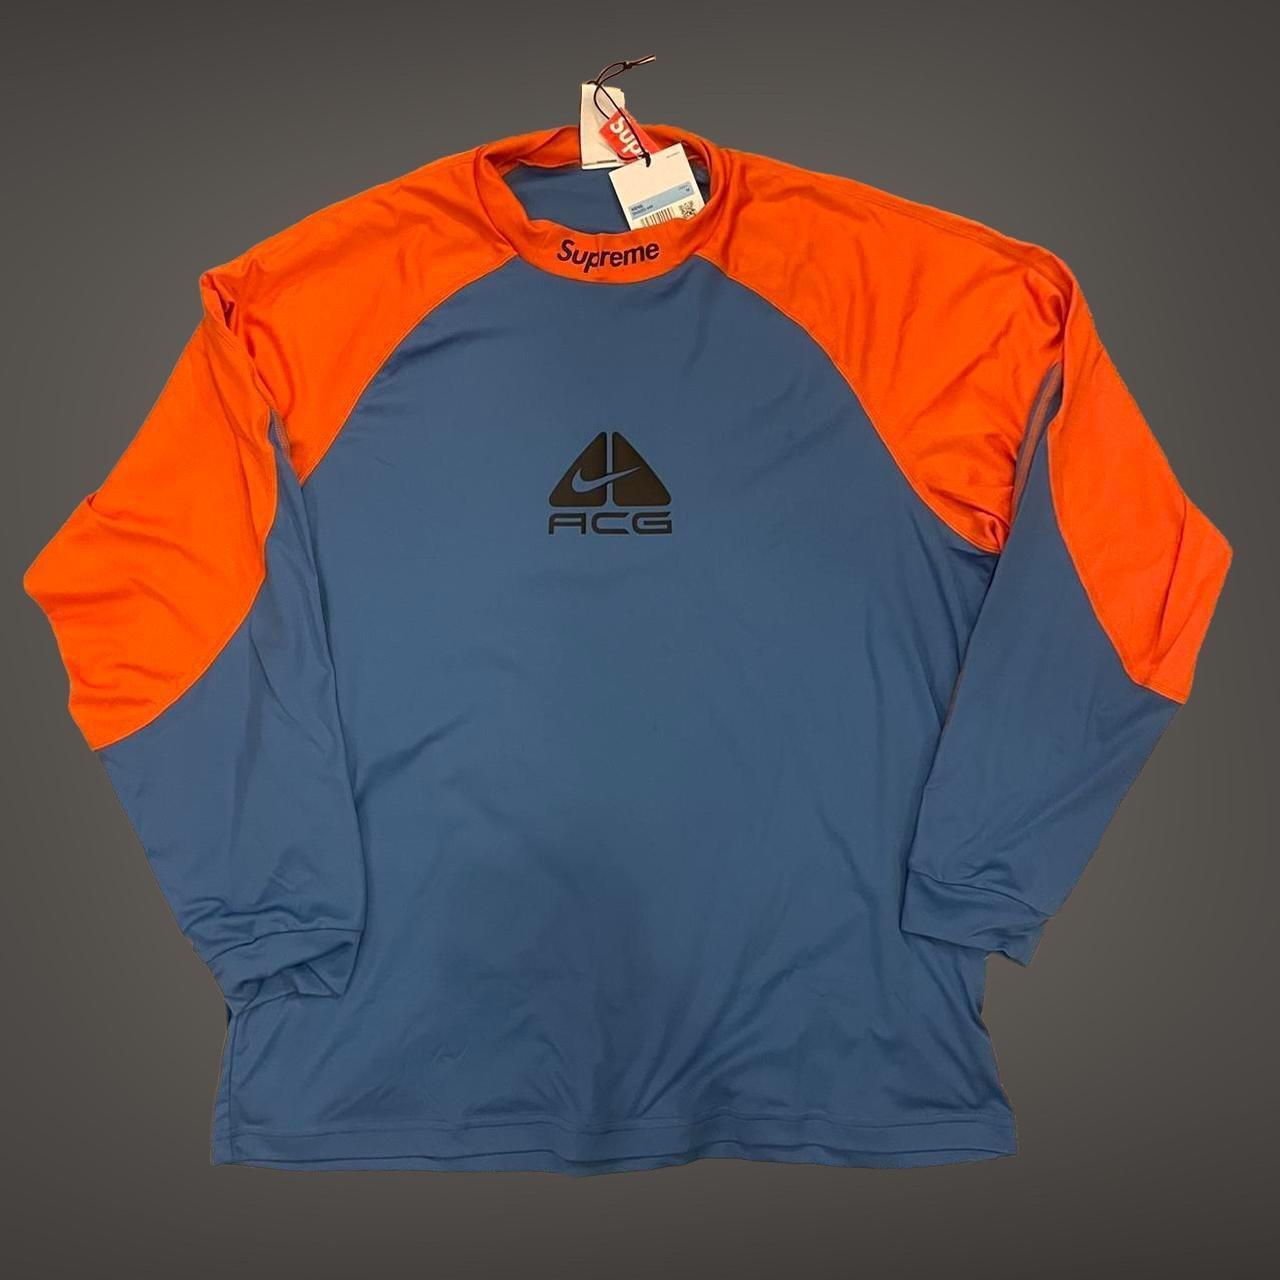 Supreme x Nike Acg long sleeve dryfit jersey orange